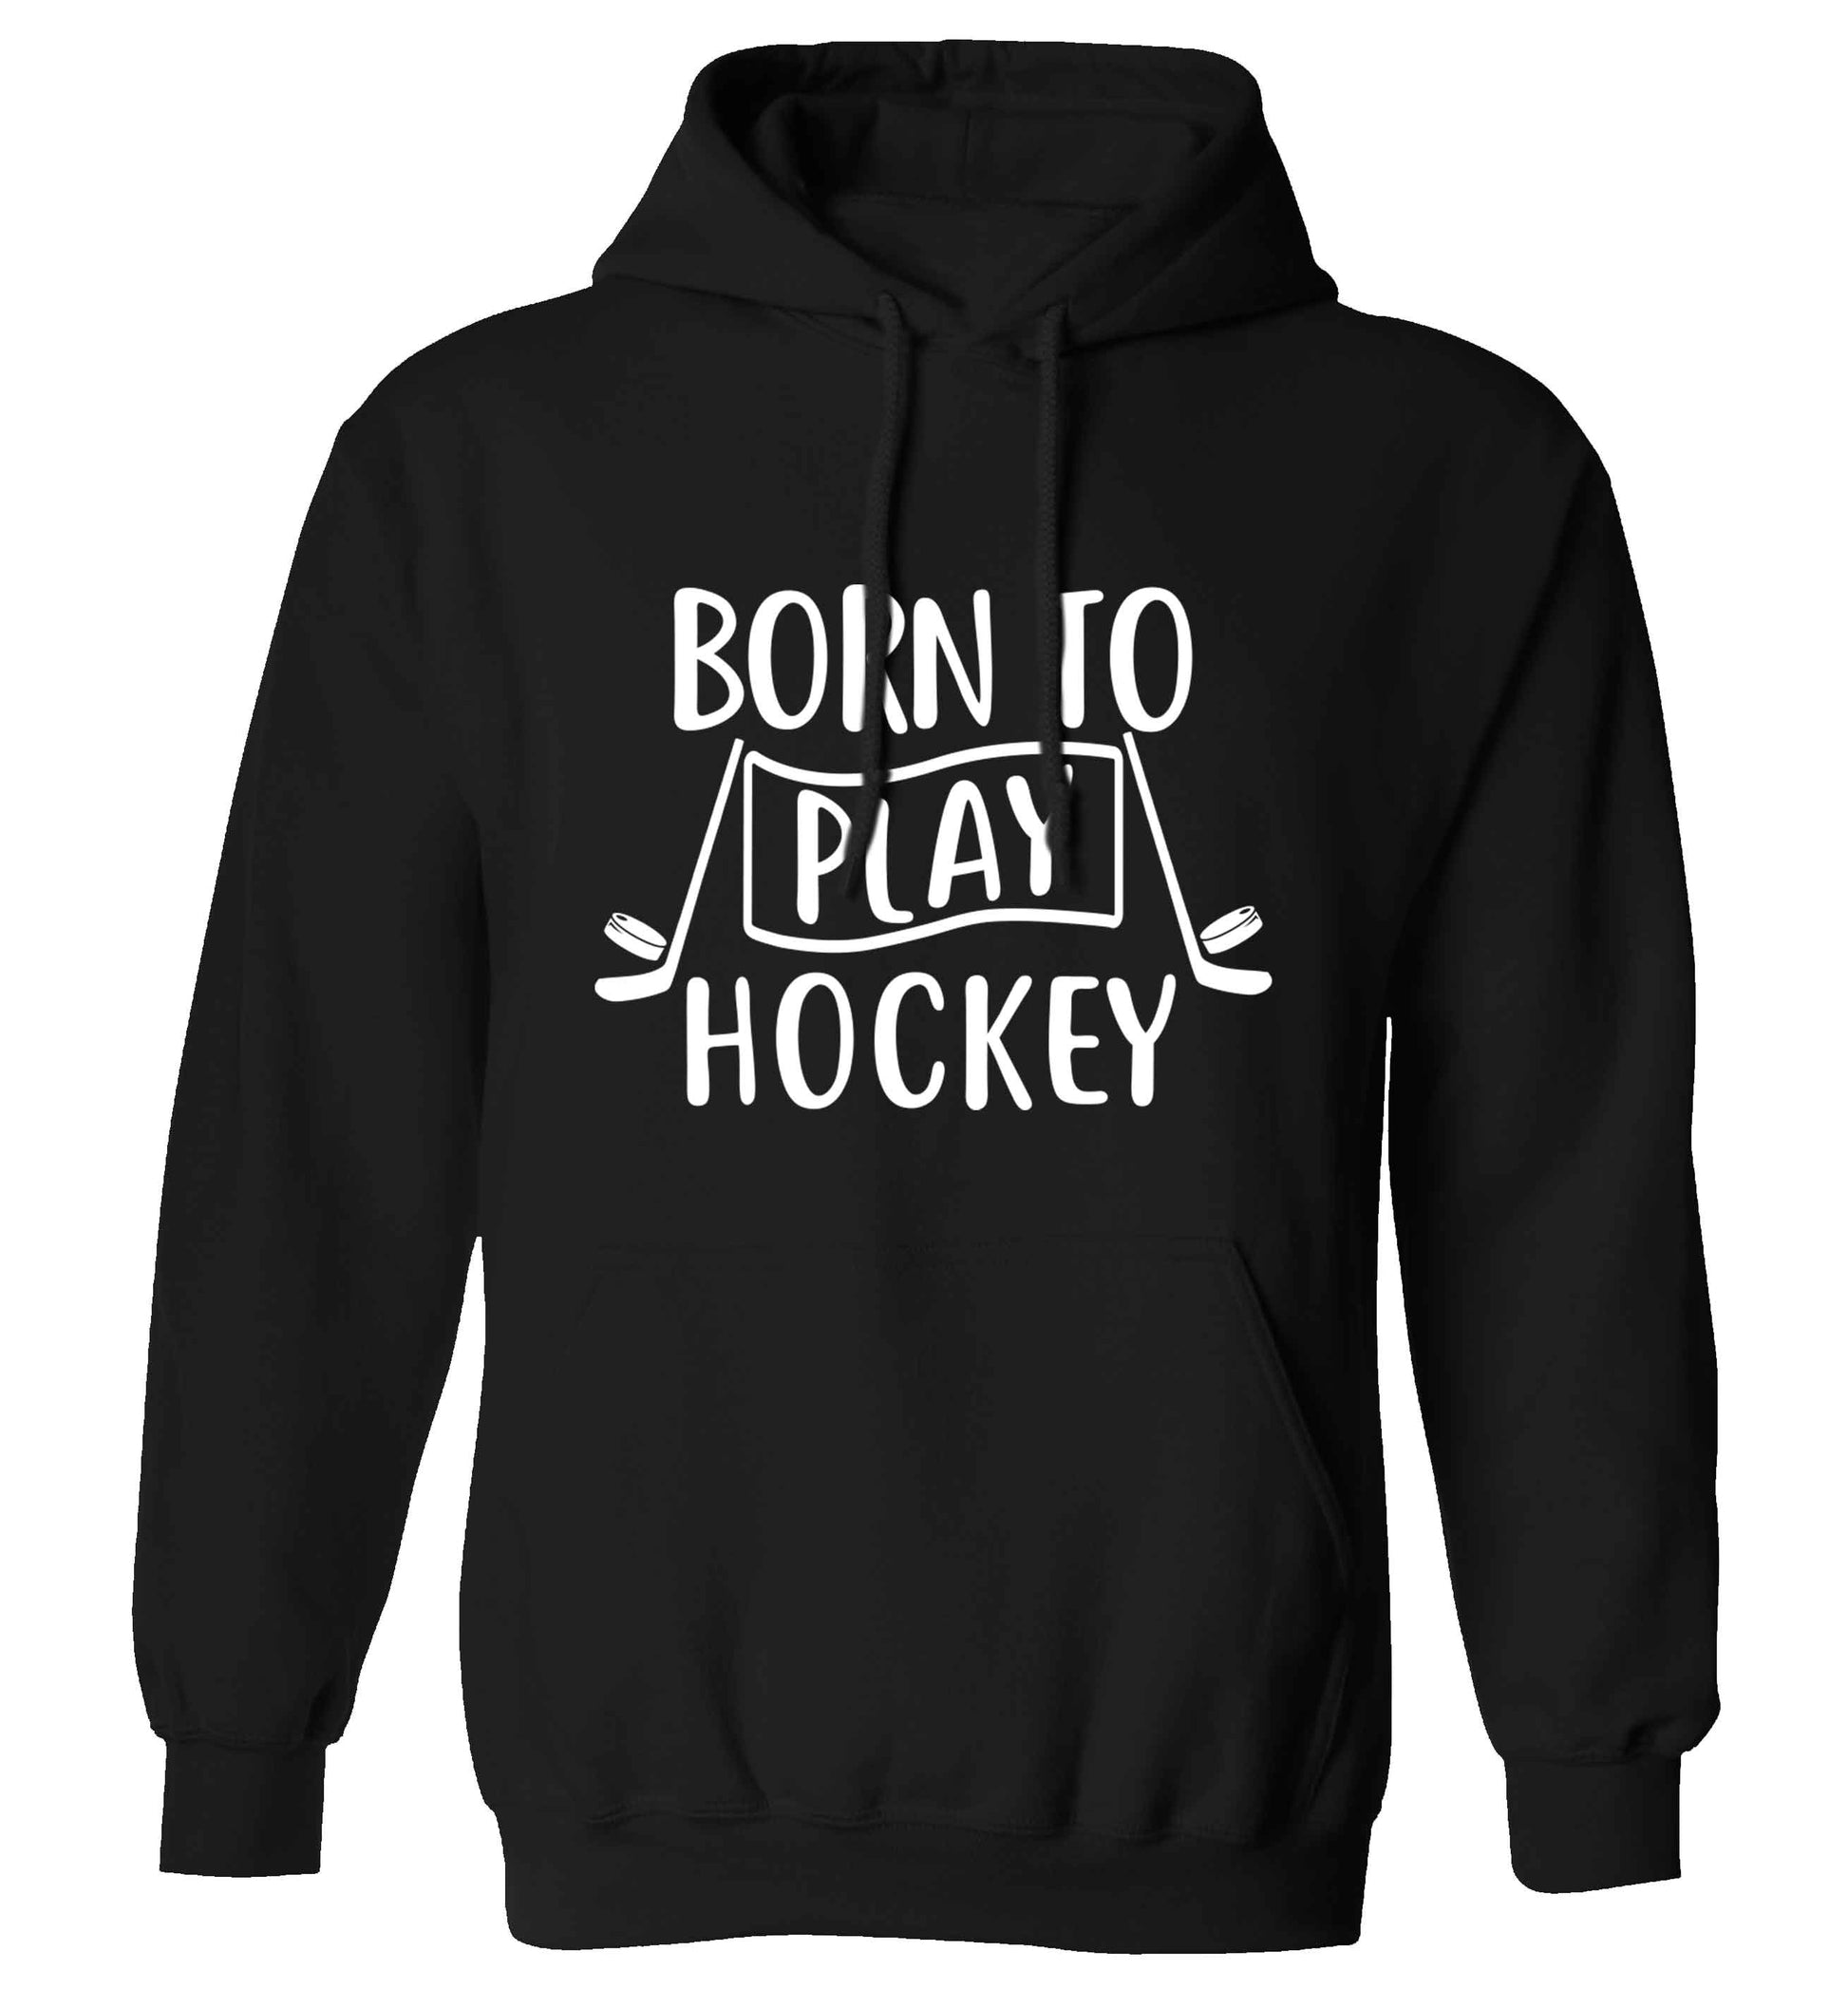 Born to play hockey adults unisex black hoodie 2XL